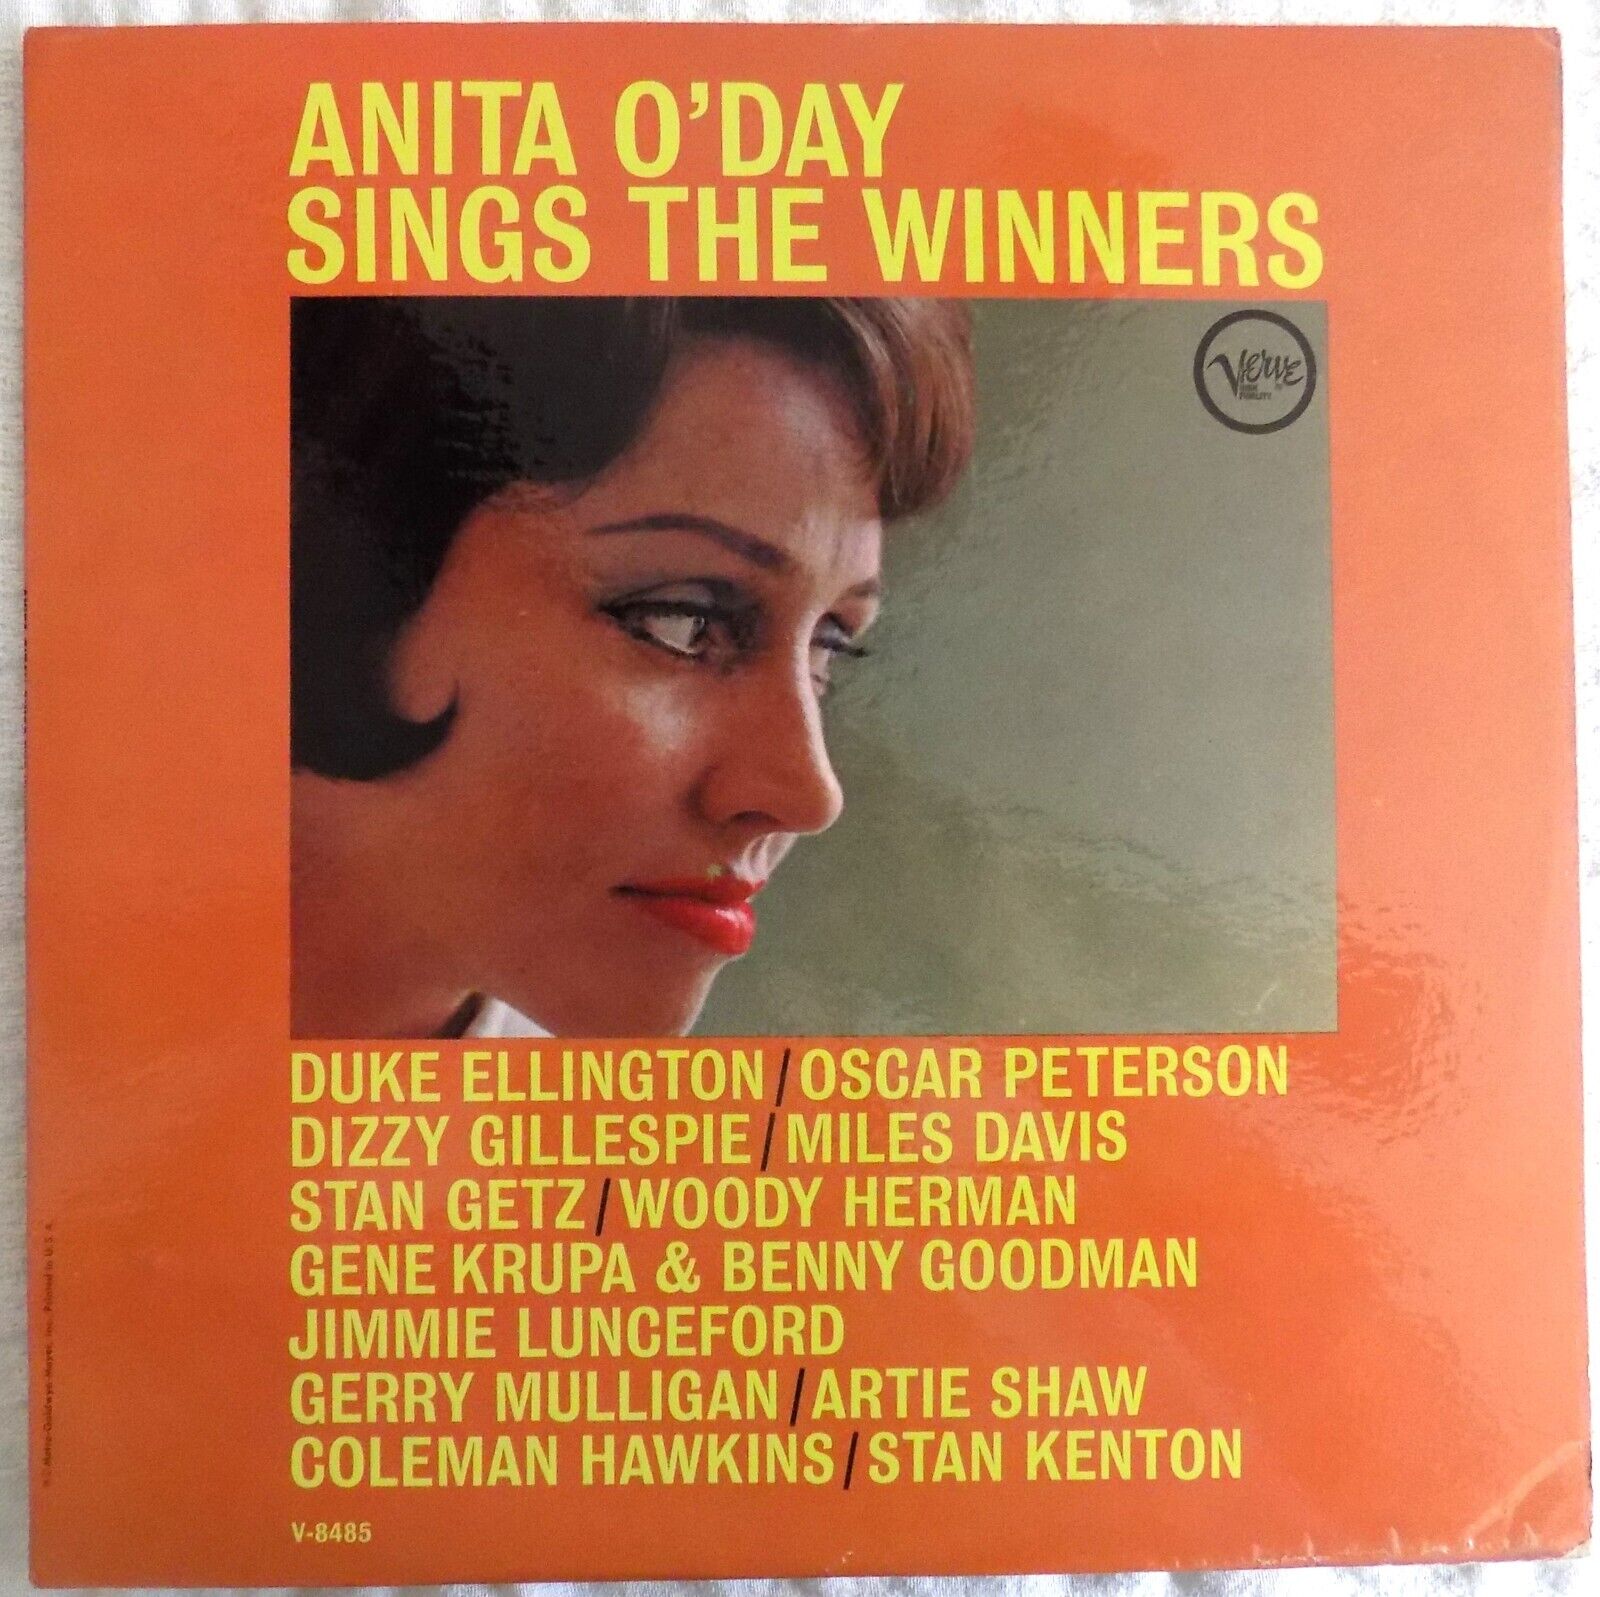 Anita O'Day - Sings the Winners LP - 1963 - Verve - MONO - USA - VG+/M-